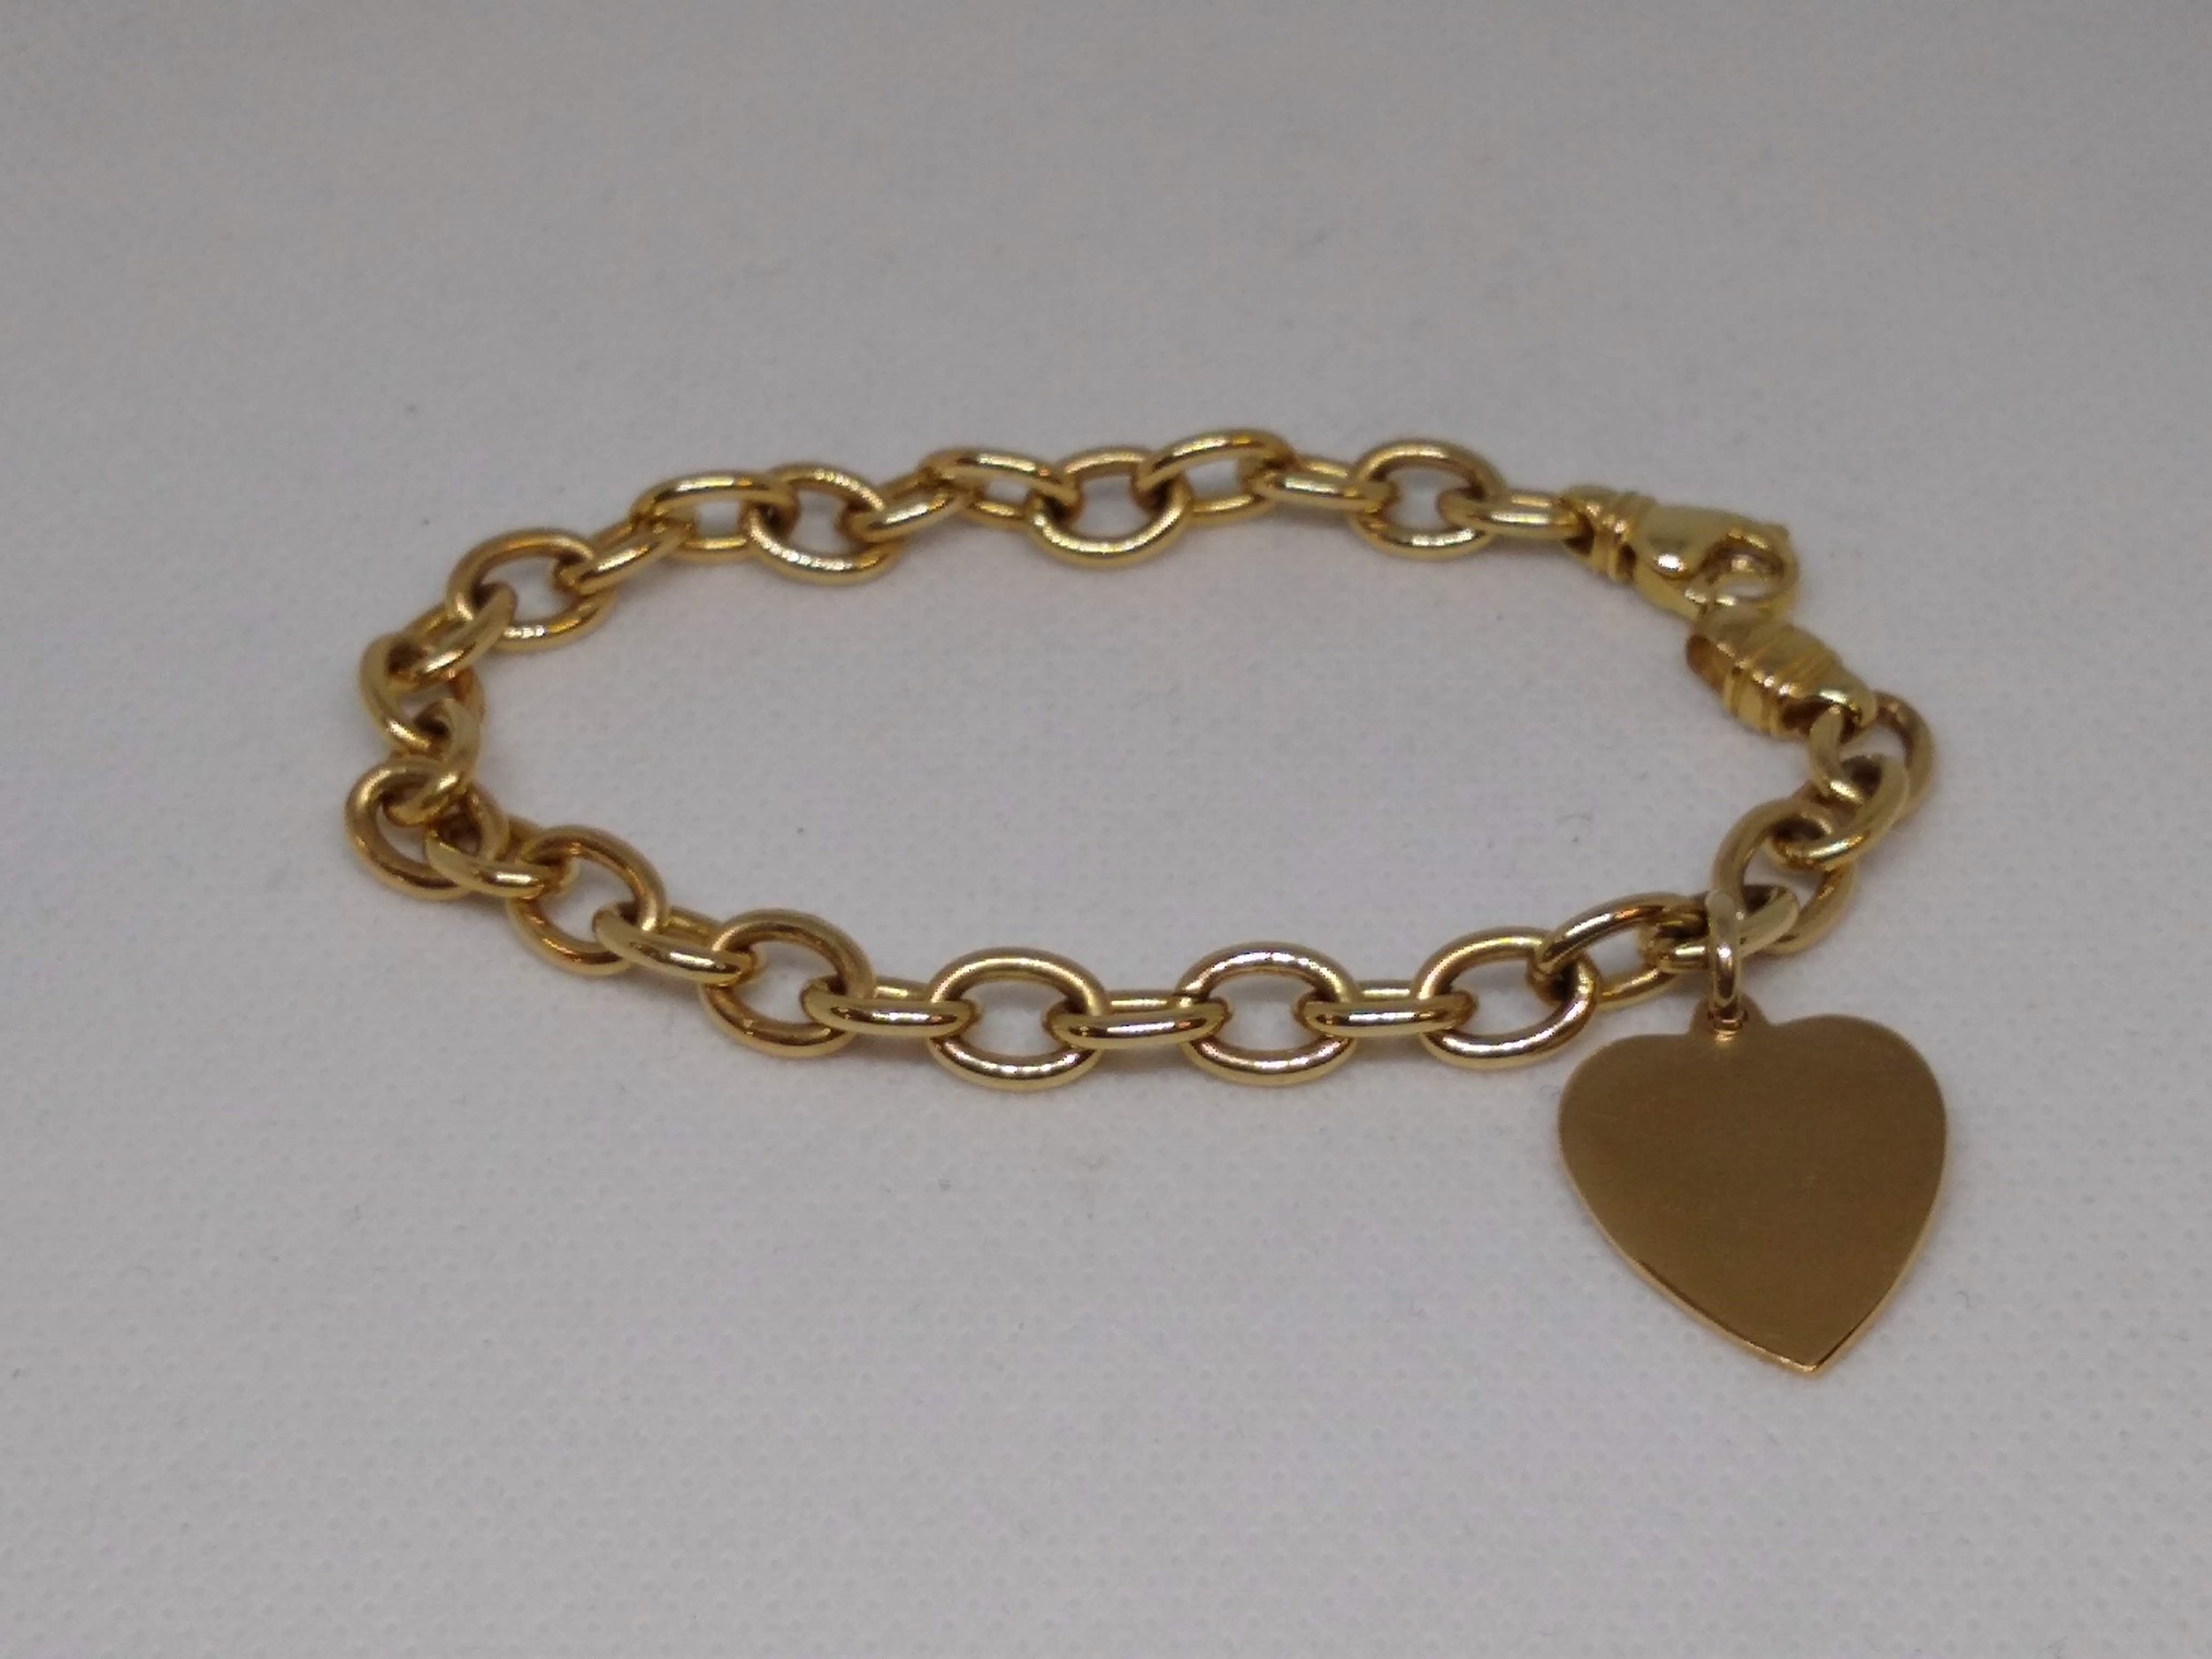 tiffany style bracelets with a heart charm